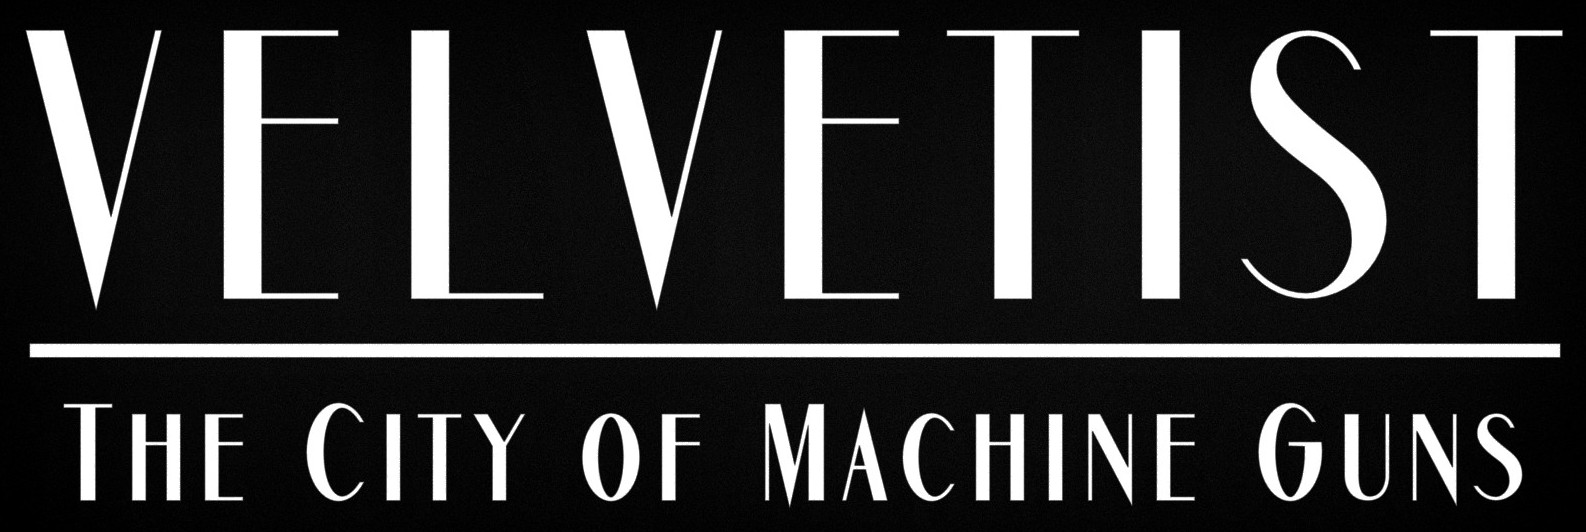 Velvetist:The City of Machine Guns